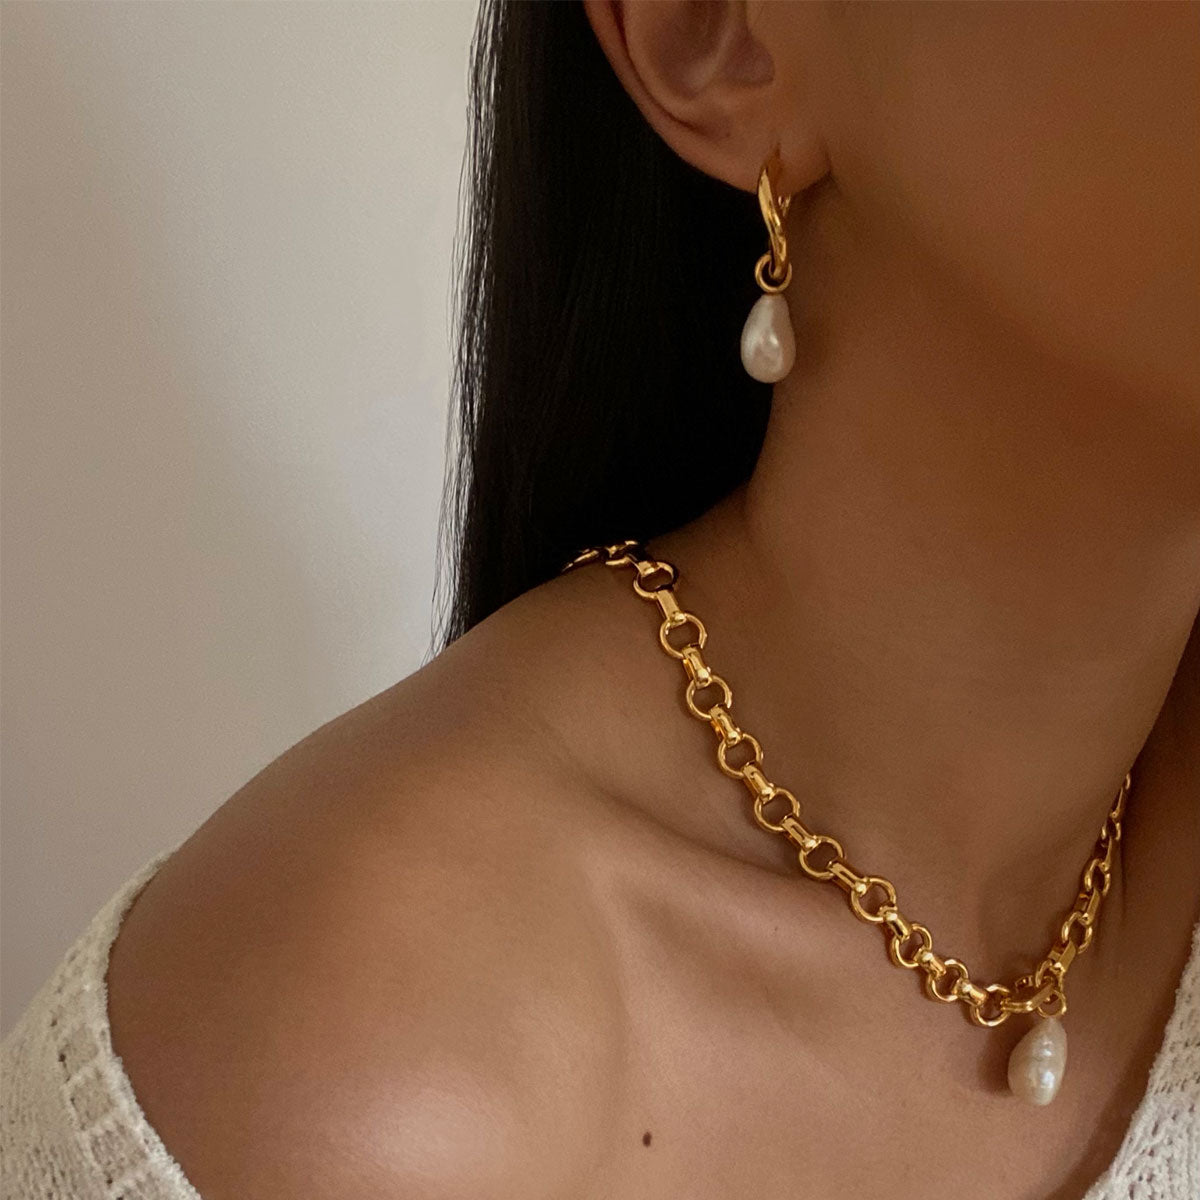 Serenity Pearl Charm Hoops in Gold worn by Lea Nguyen